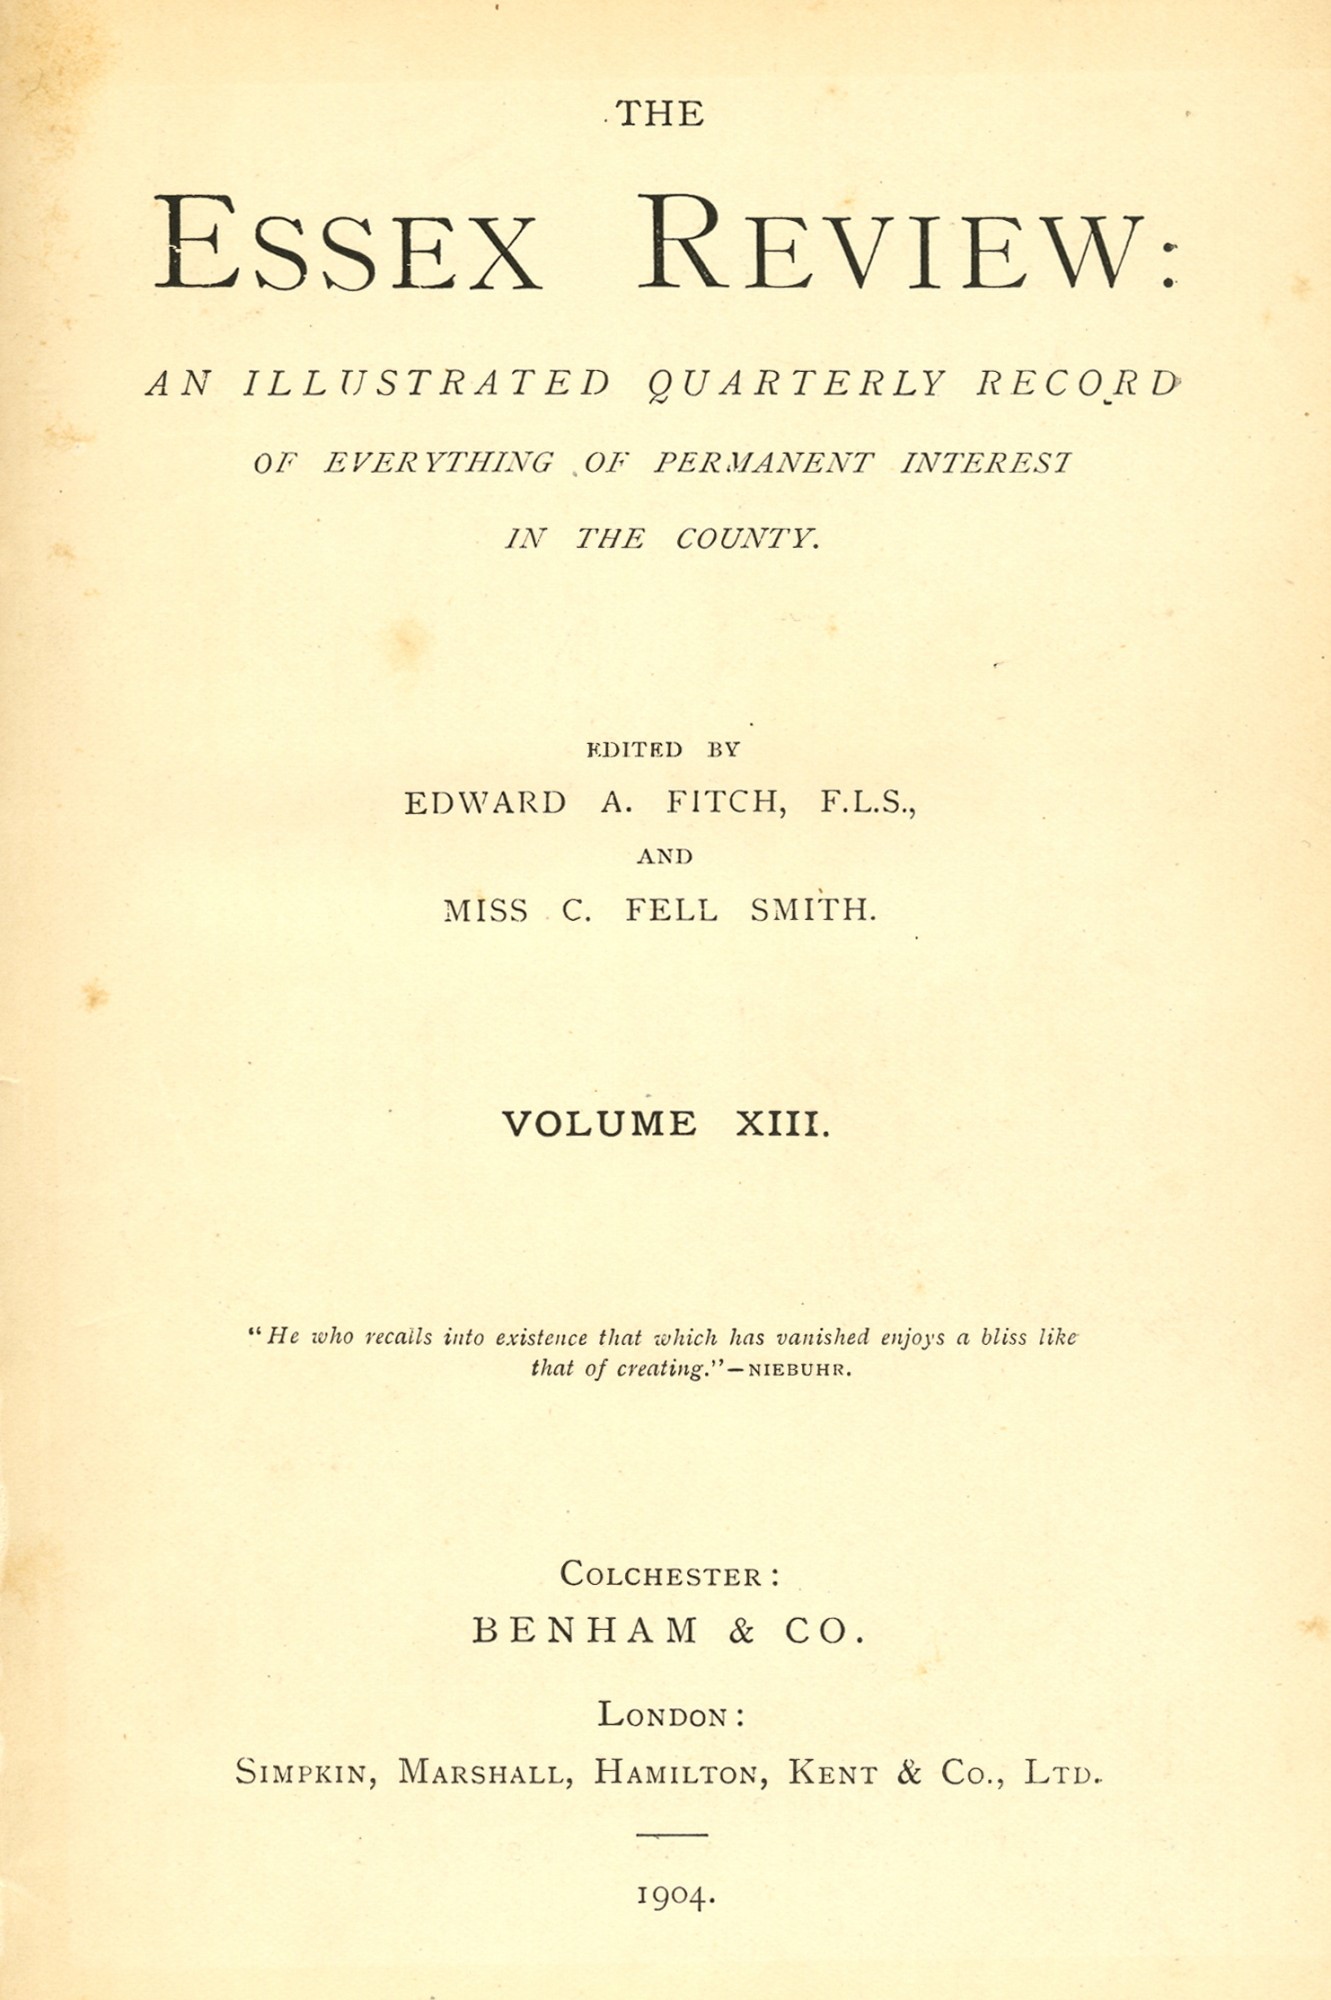 Volume 13 (1904) publications illustration 1